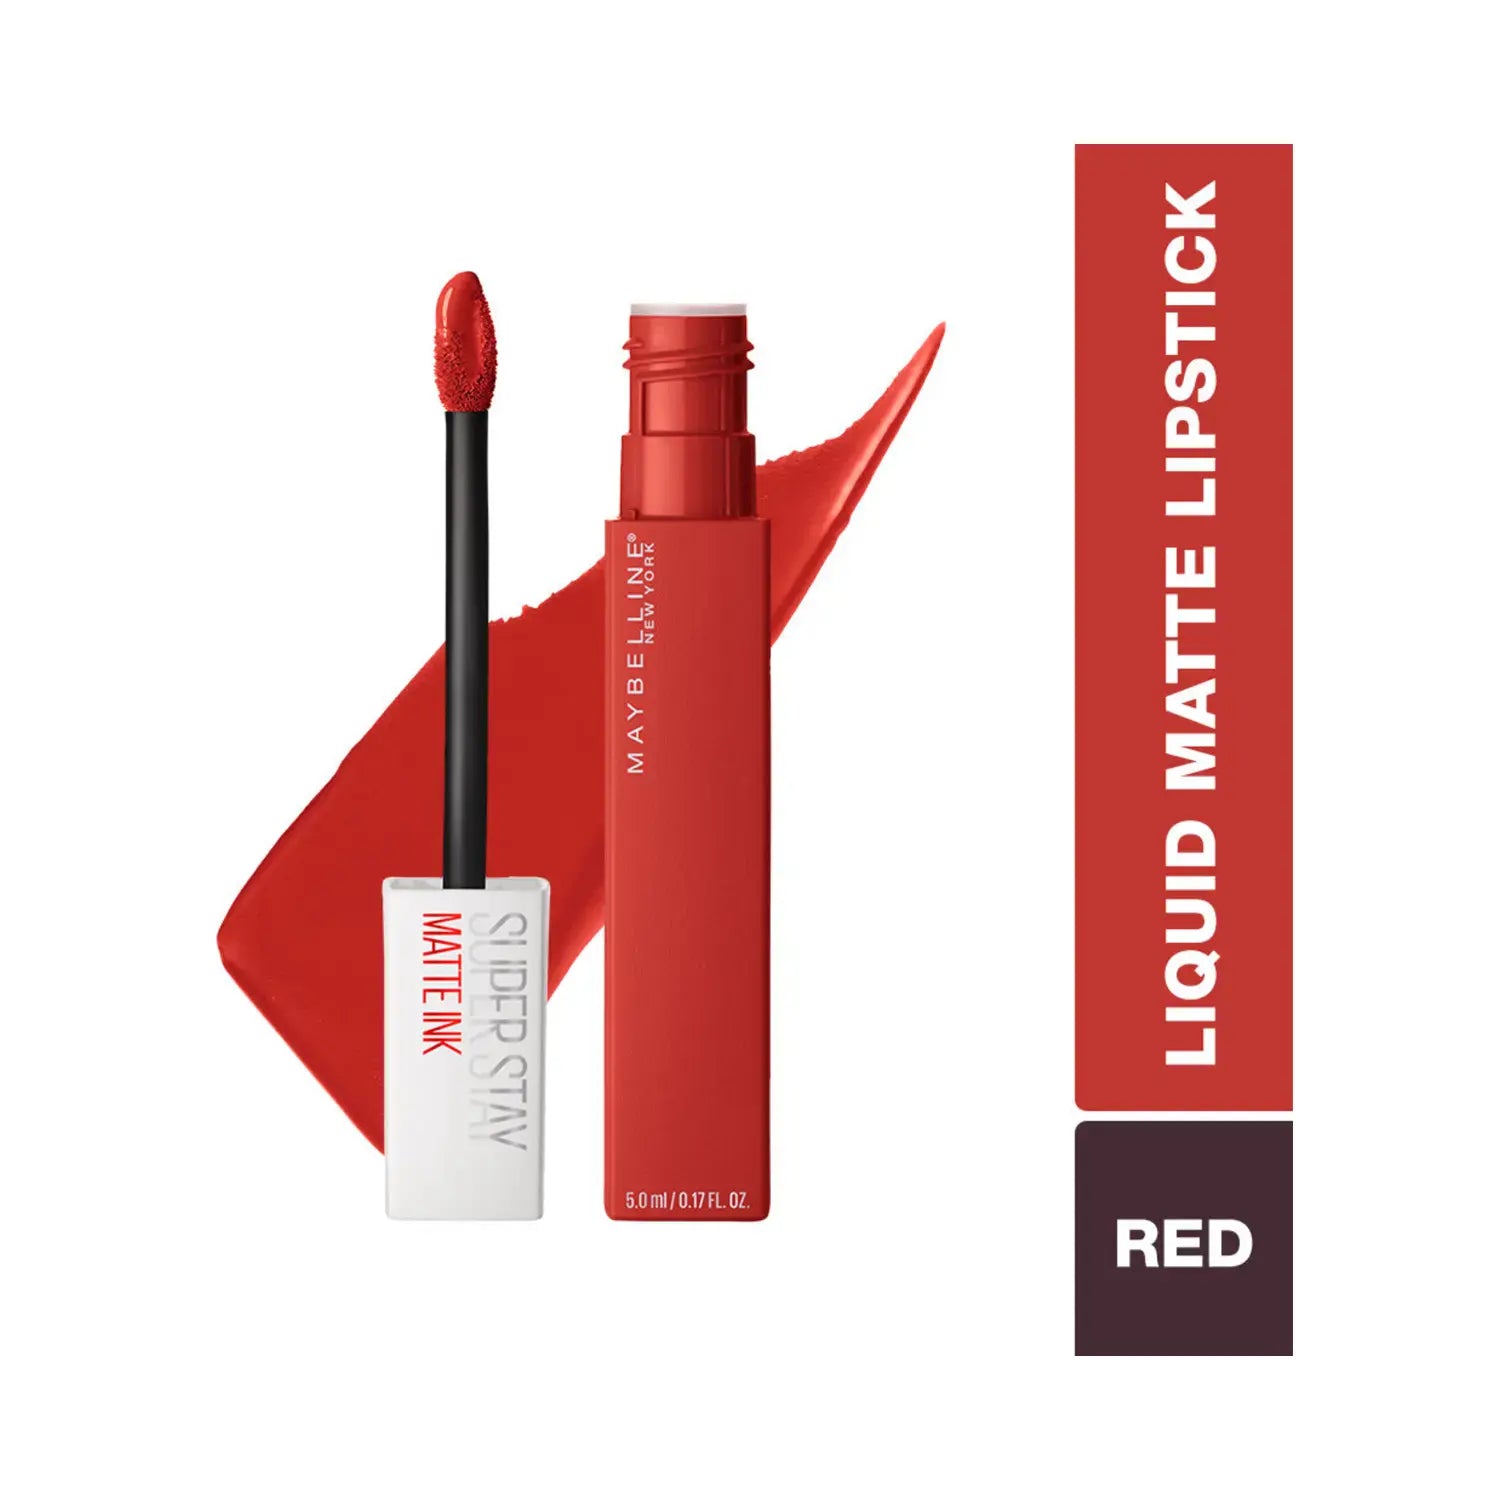 Super Beauty – Lipstick - Dancer Planet, Liquid York 118 Ink New Maybelline Stay Matte